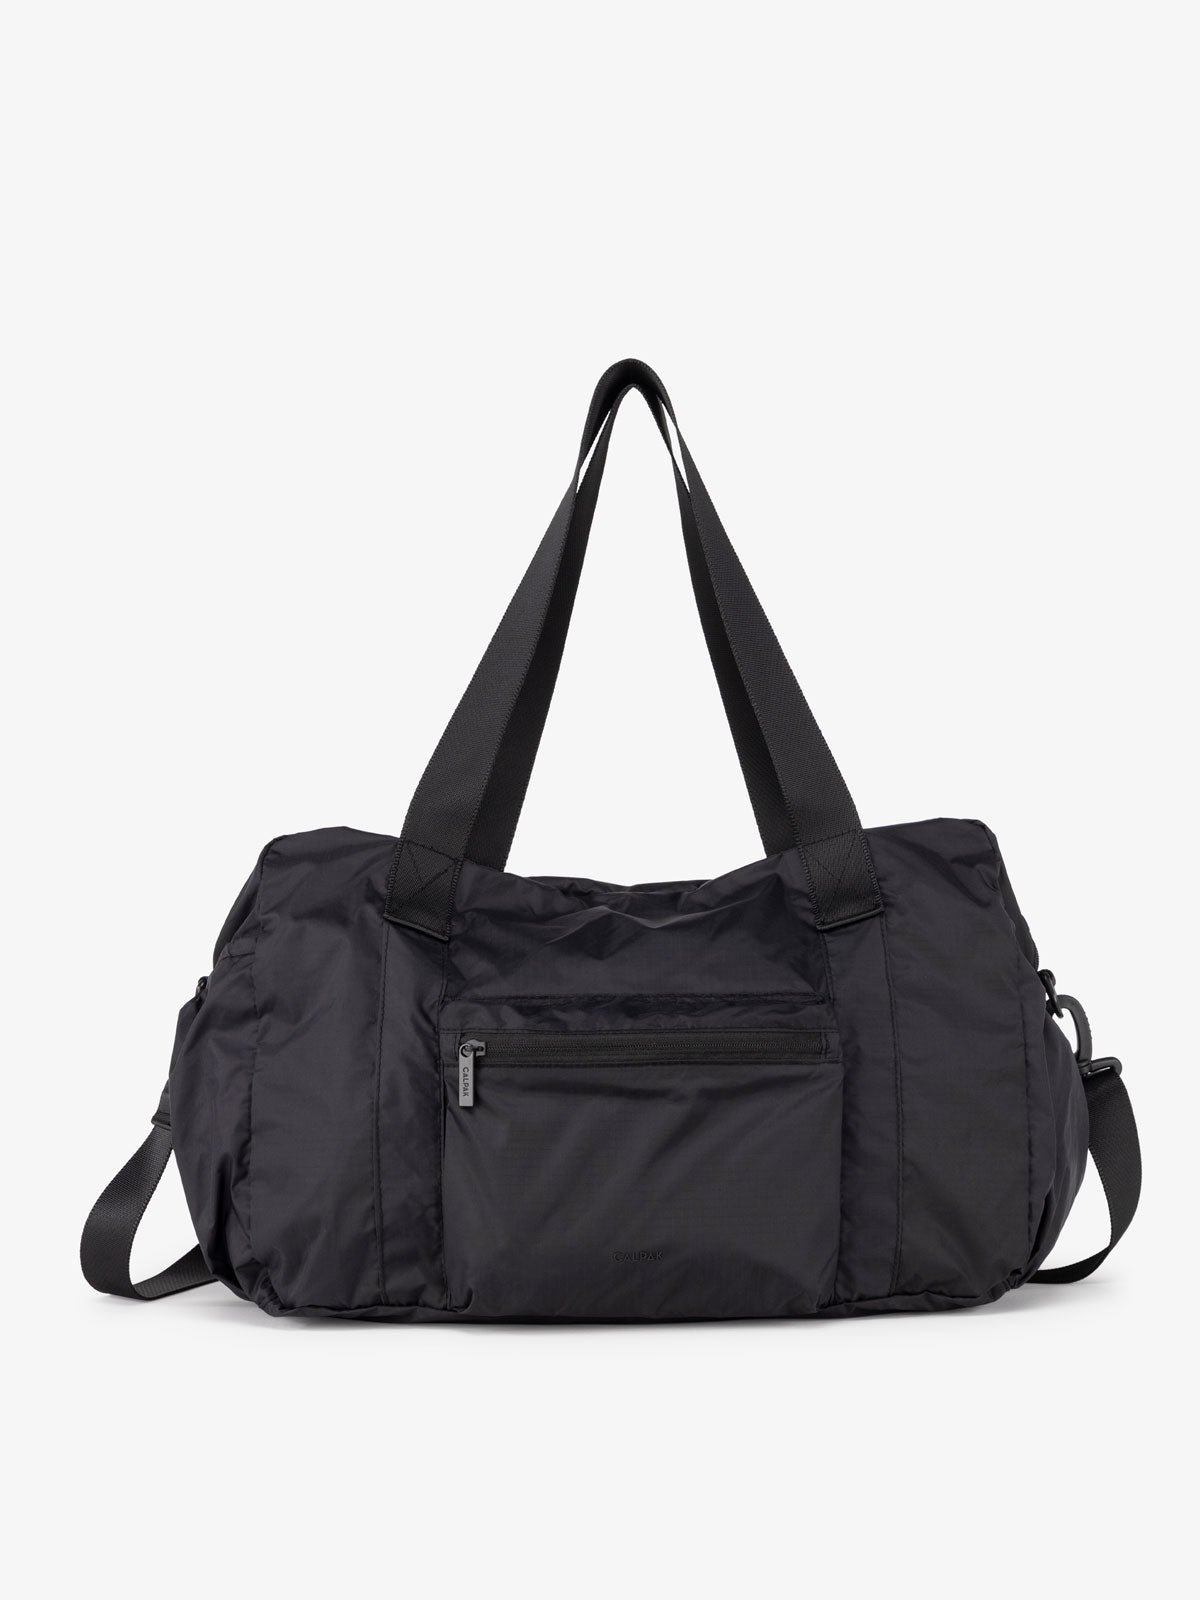 CALPAK black packable duffle bag